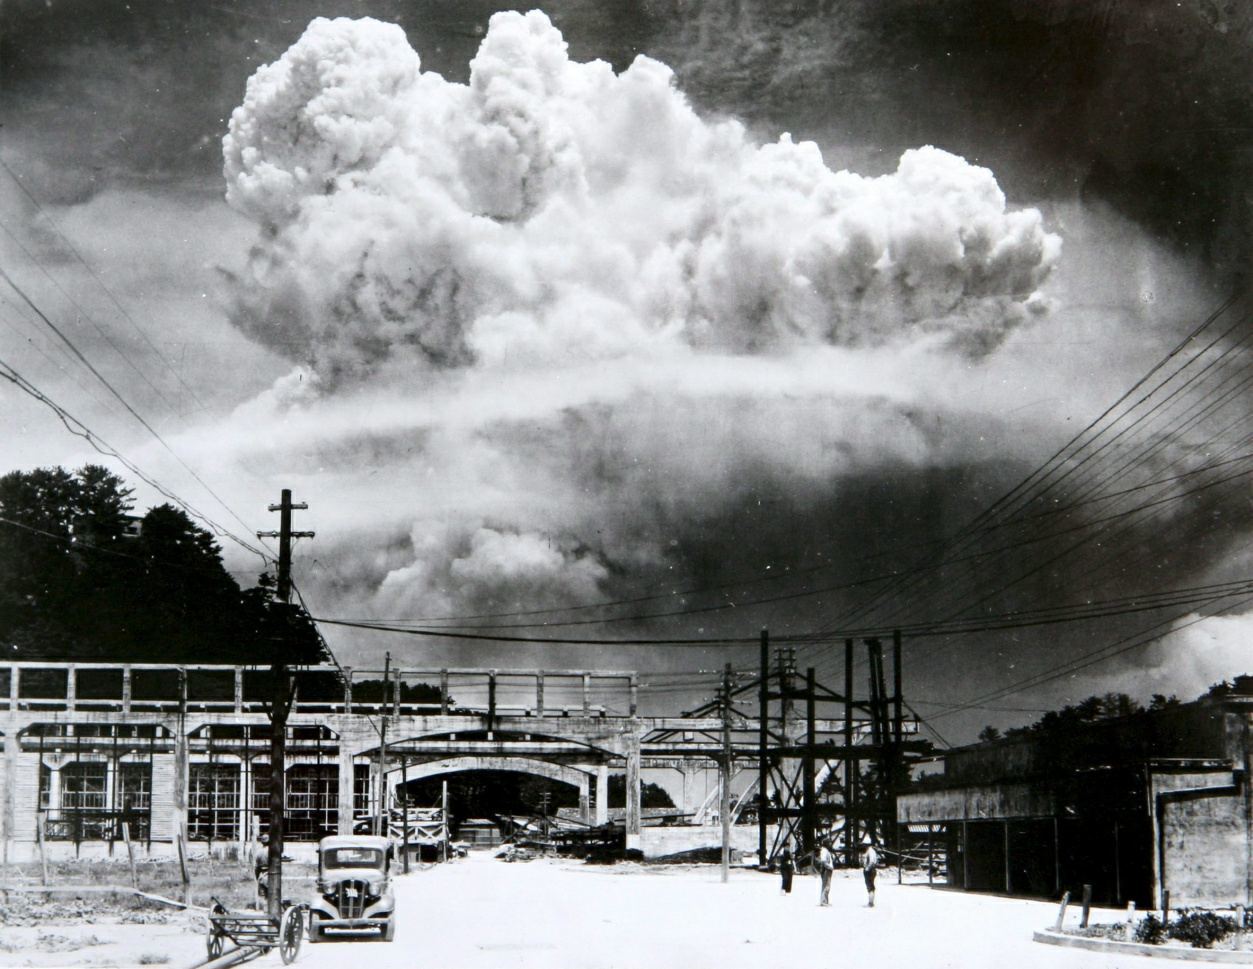 Wingu la atomiki linamzunguka Nagasaki